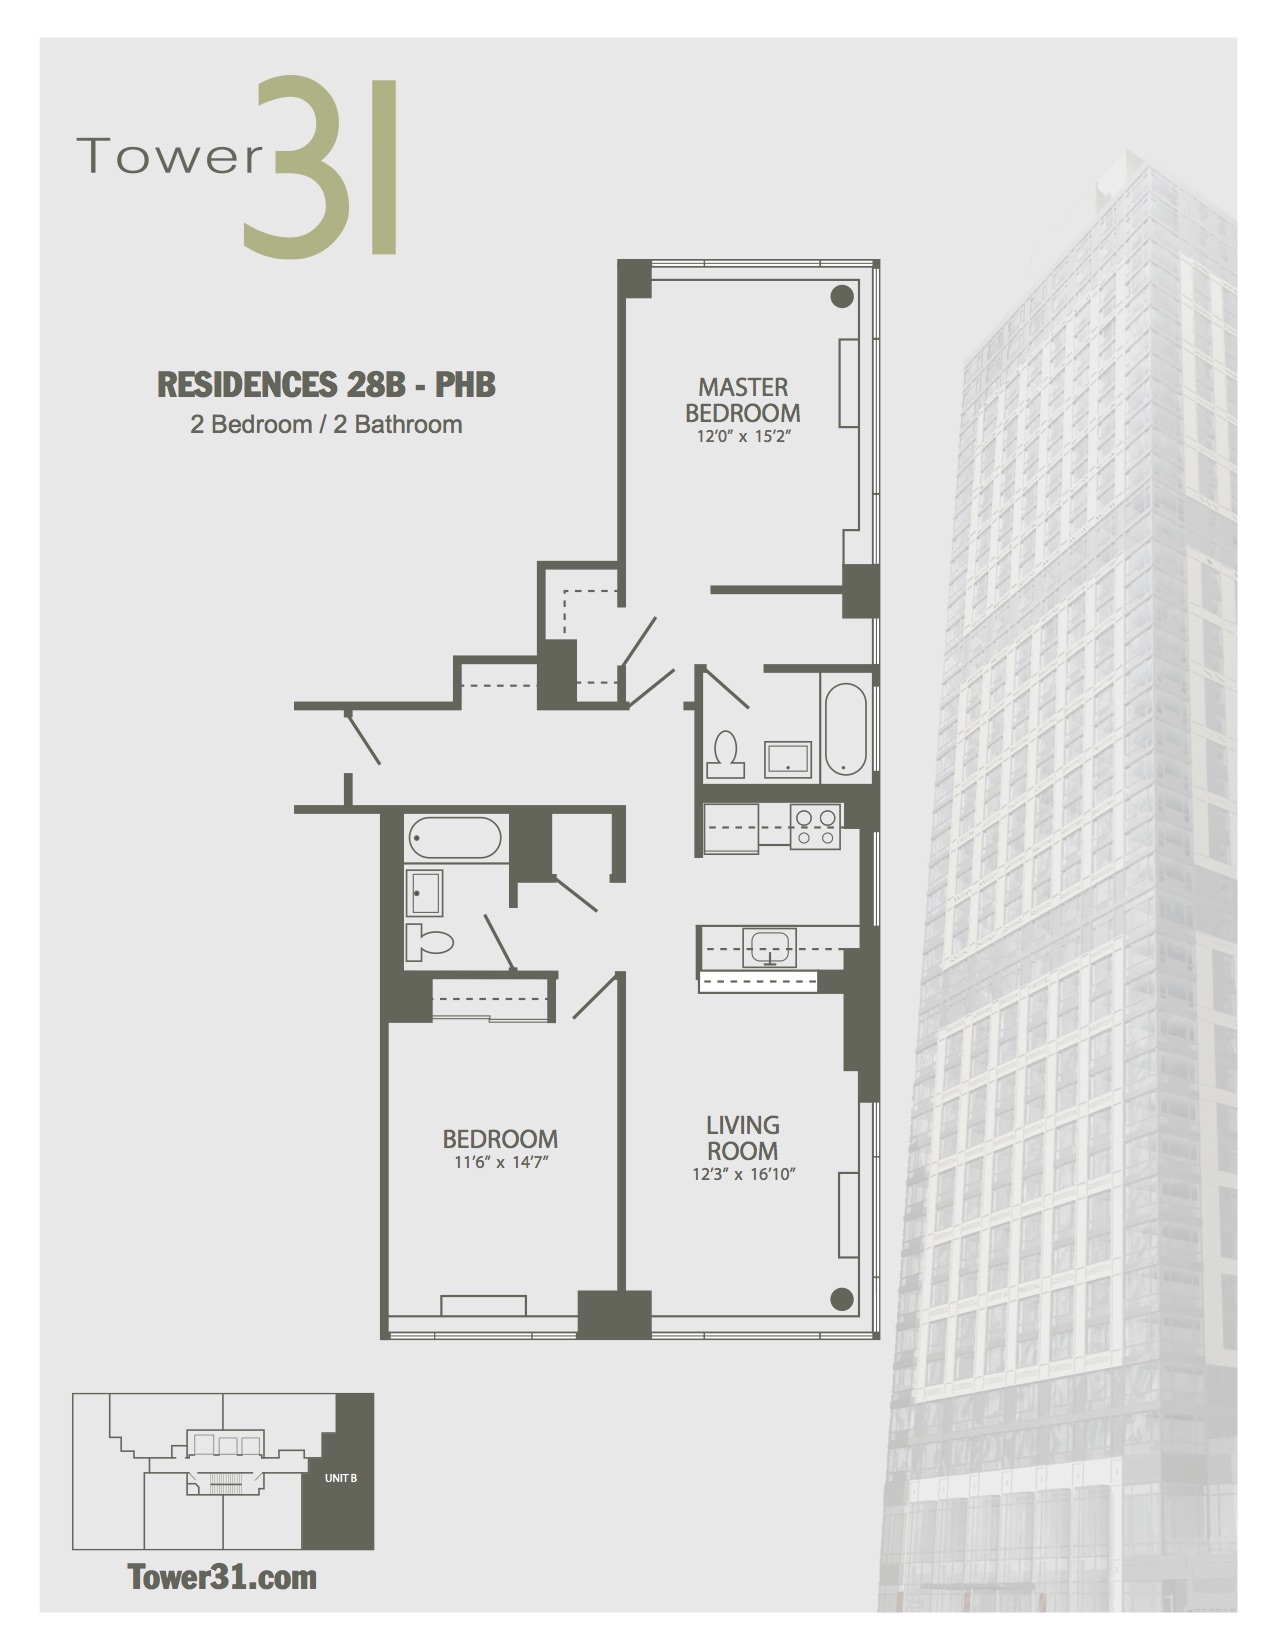 Residence B Floors 28-PH